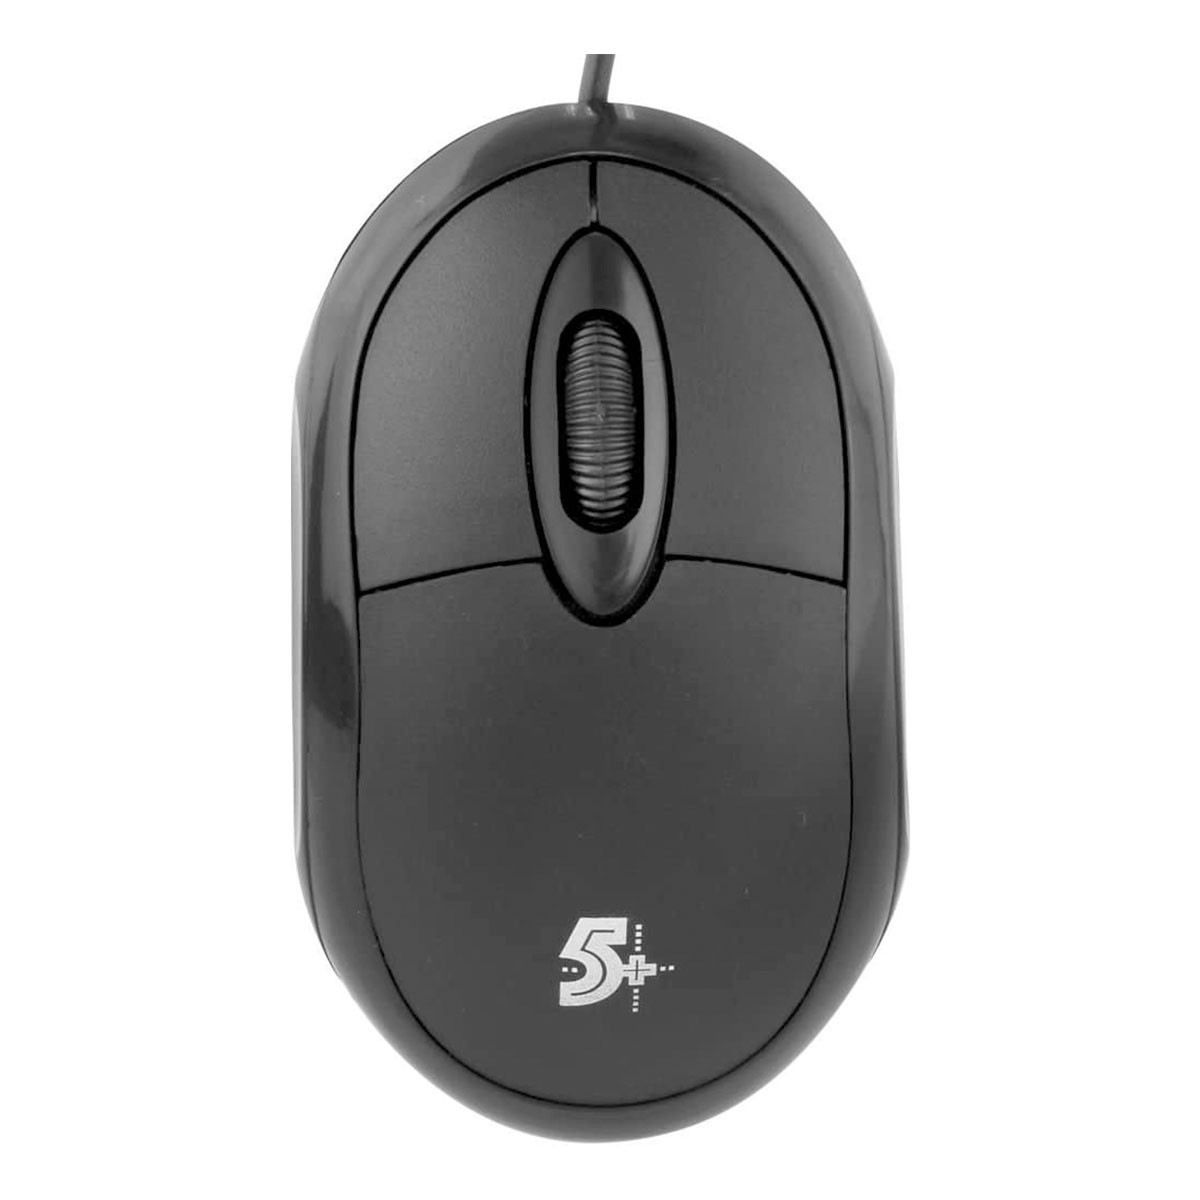 Mouse USB 5+ Office - 1000dpi - Preto - 015-0043